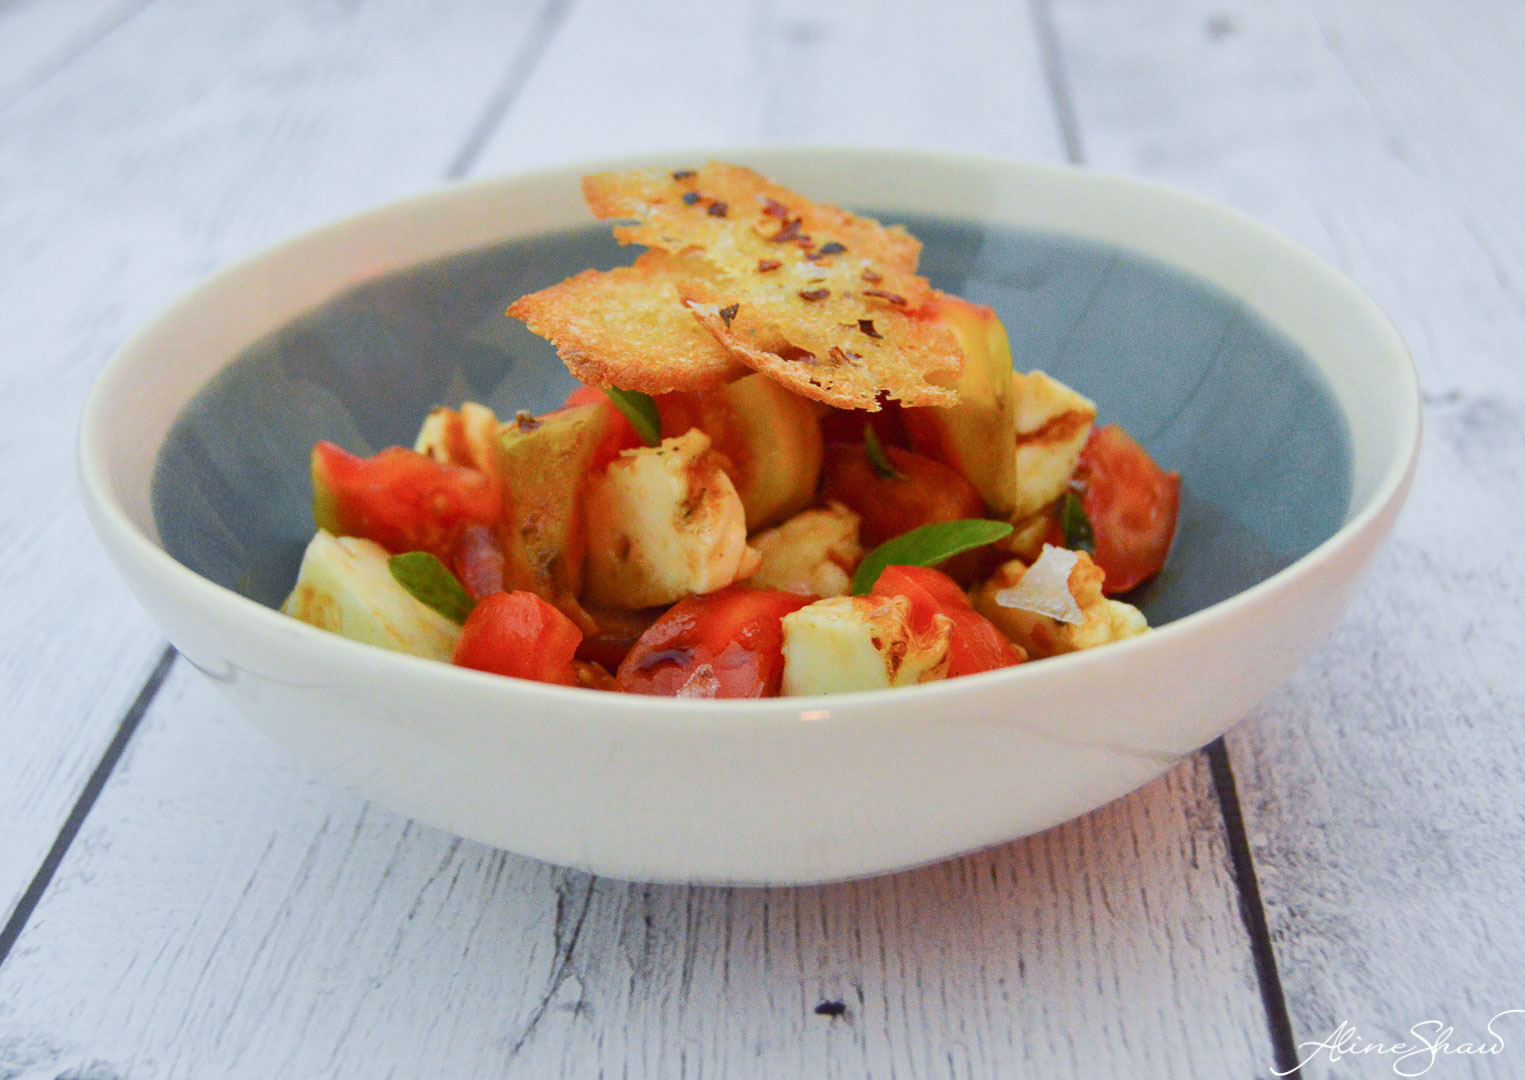 Tomato Salad Recipe with Balsamic Vinegar and grilled Brazilian queijo coalho